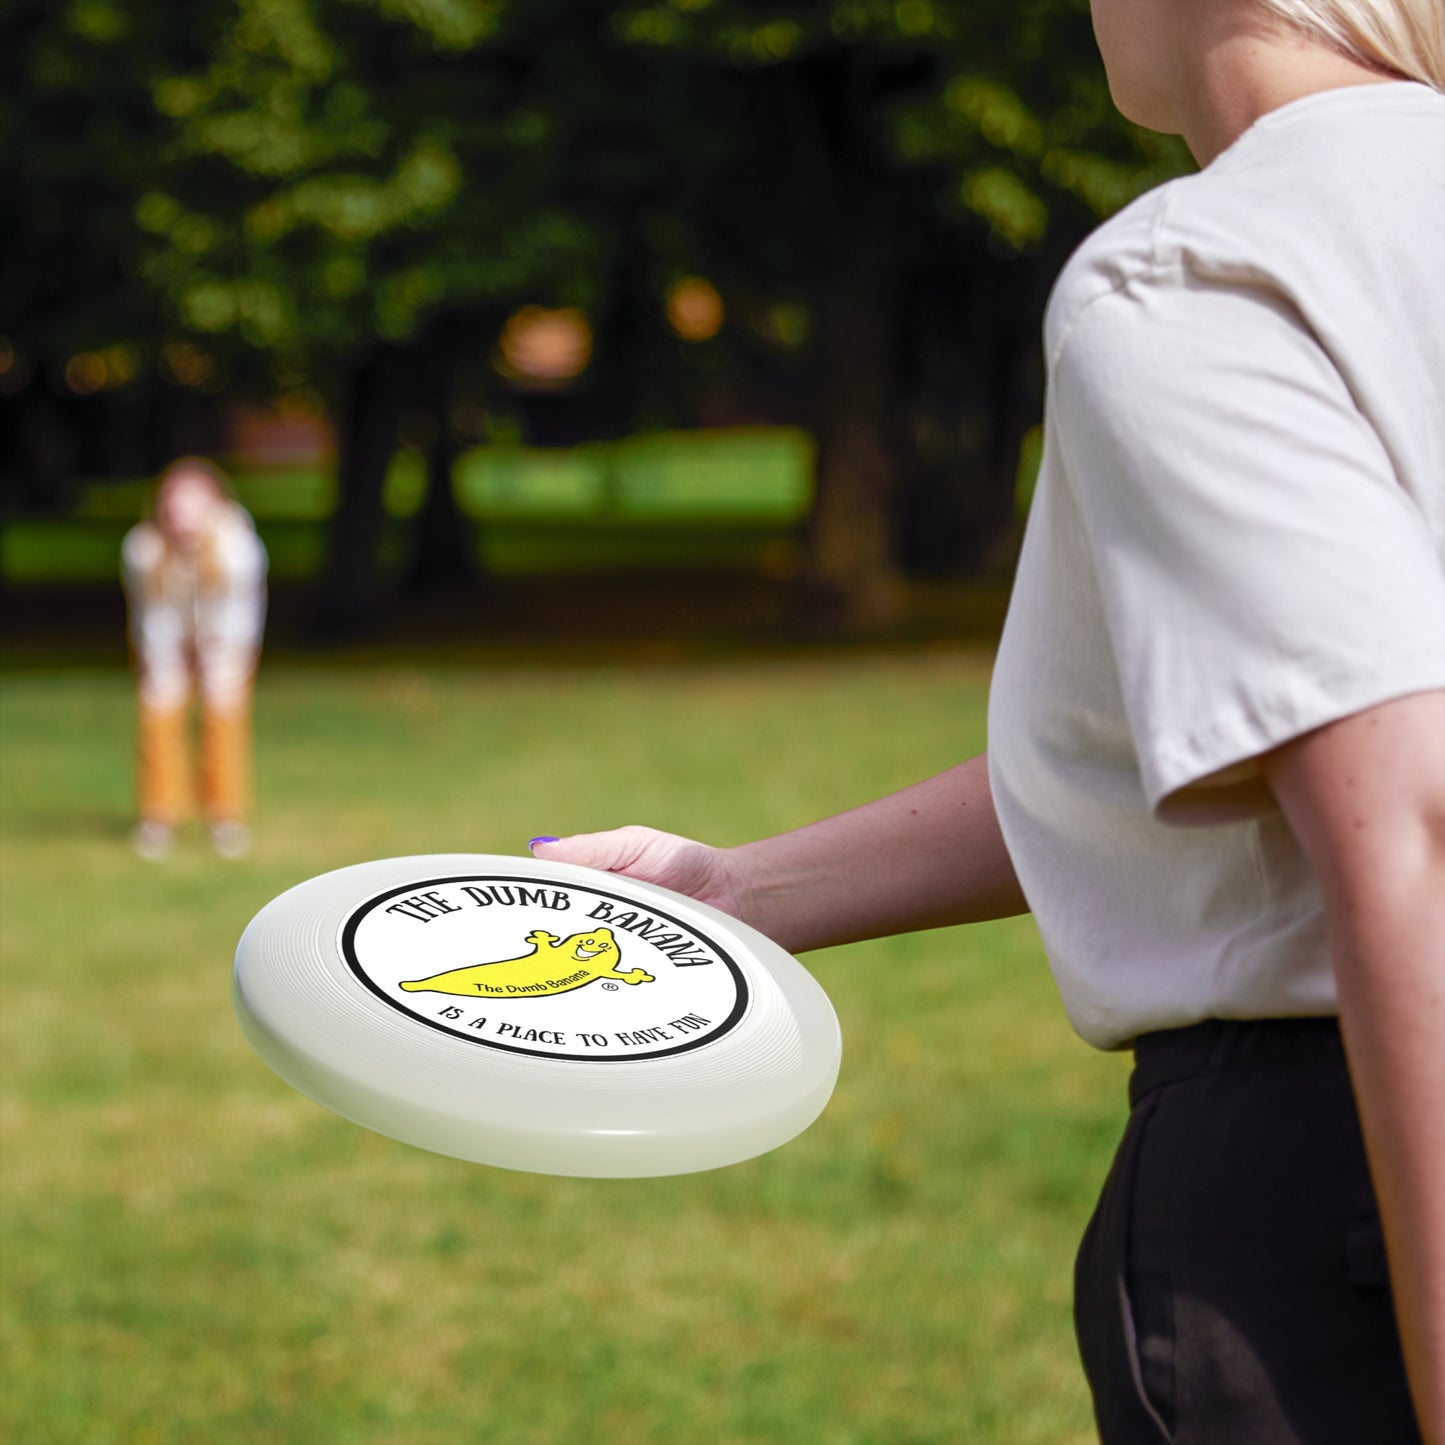 THE DUMB BANANA Wham-O Frisbee